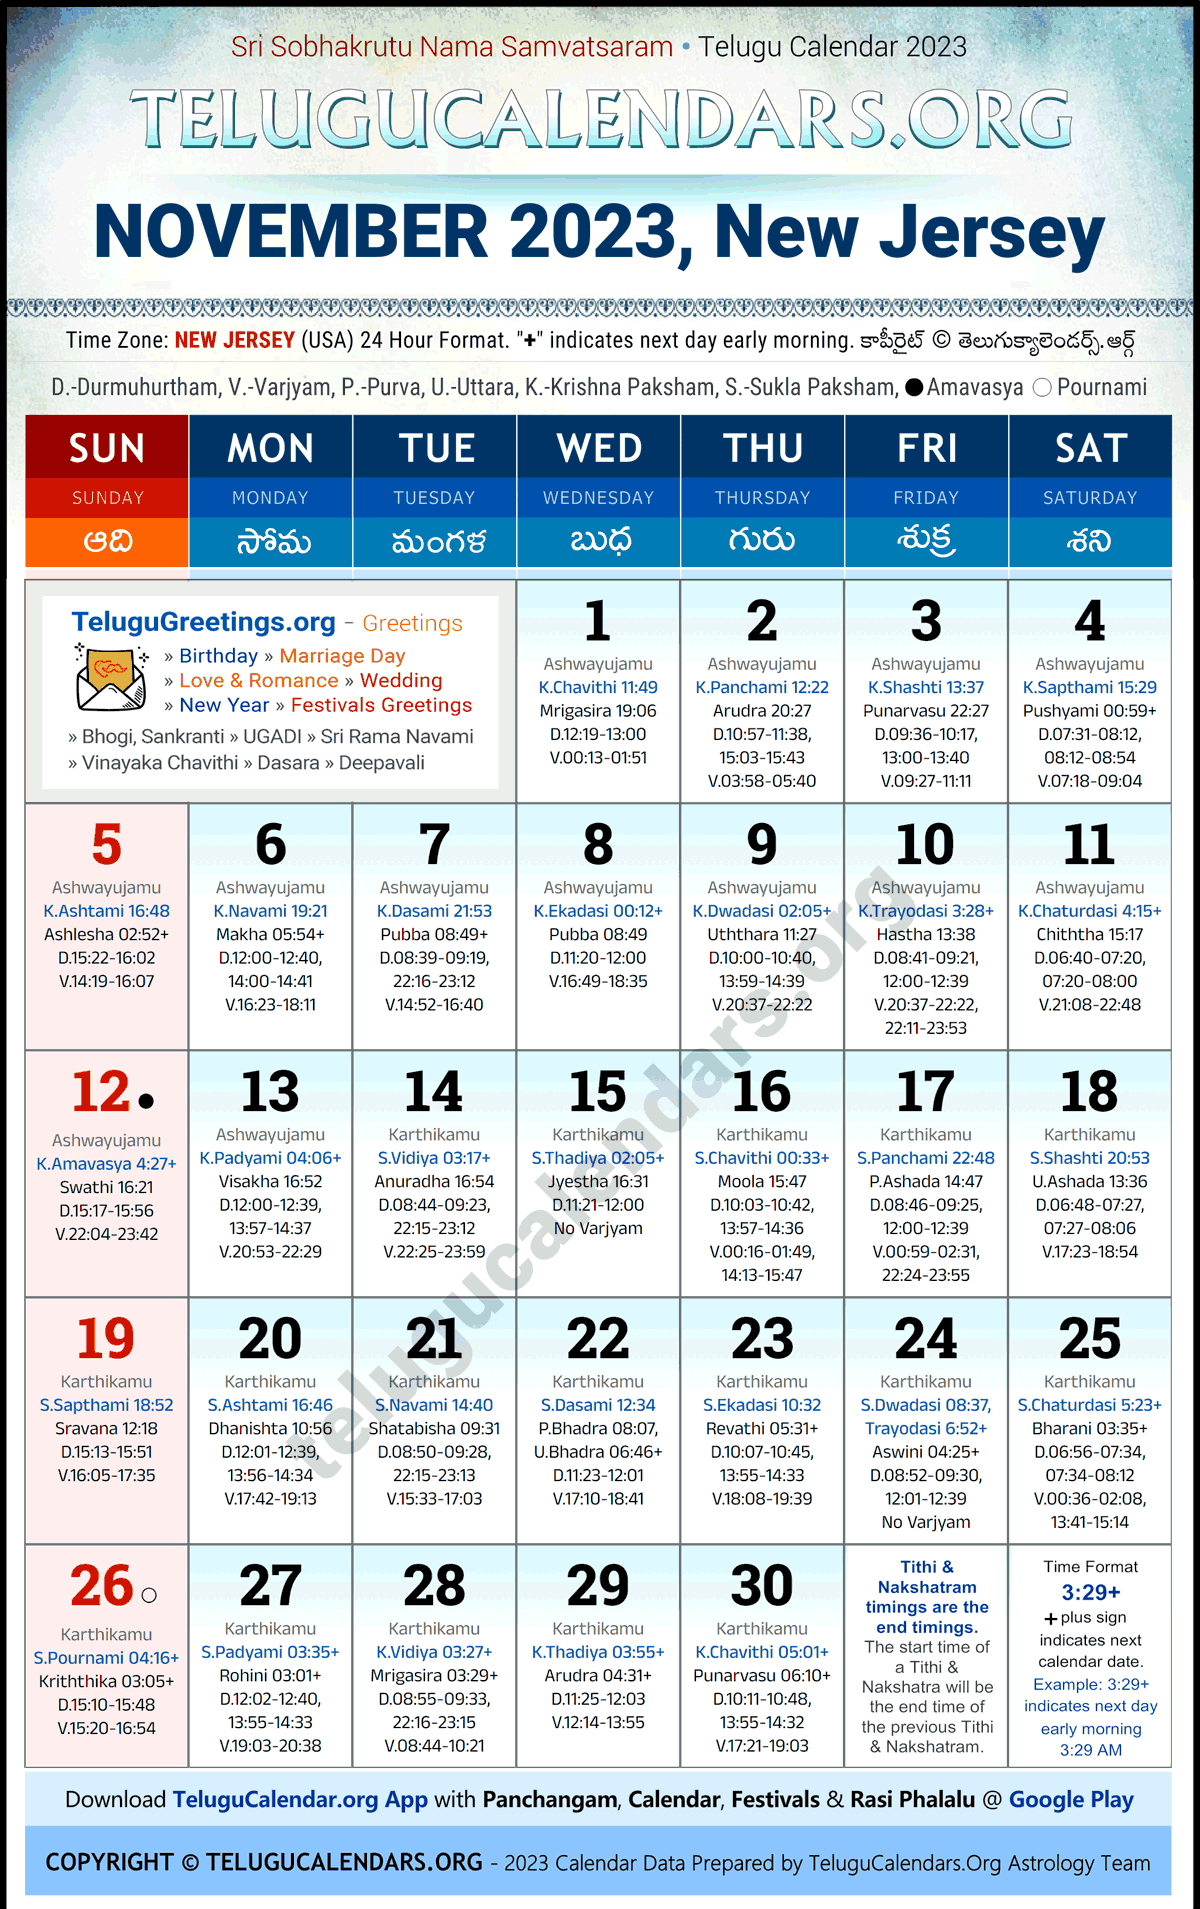 Telugu Calendar 2023 November Festivals for New Jersey